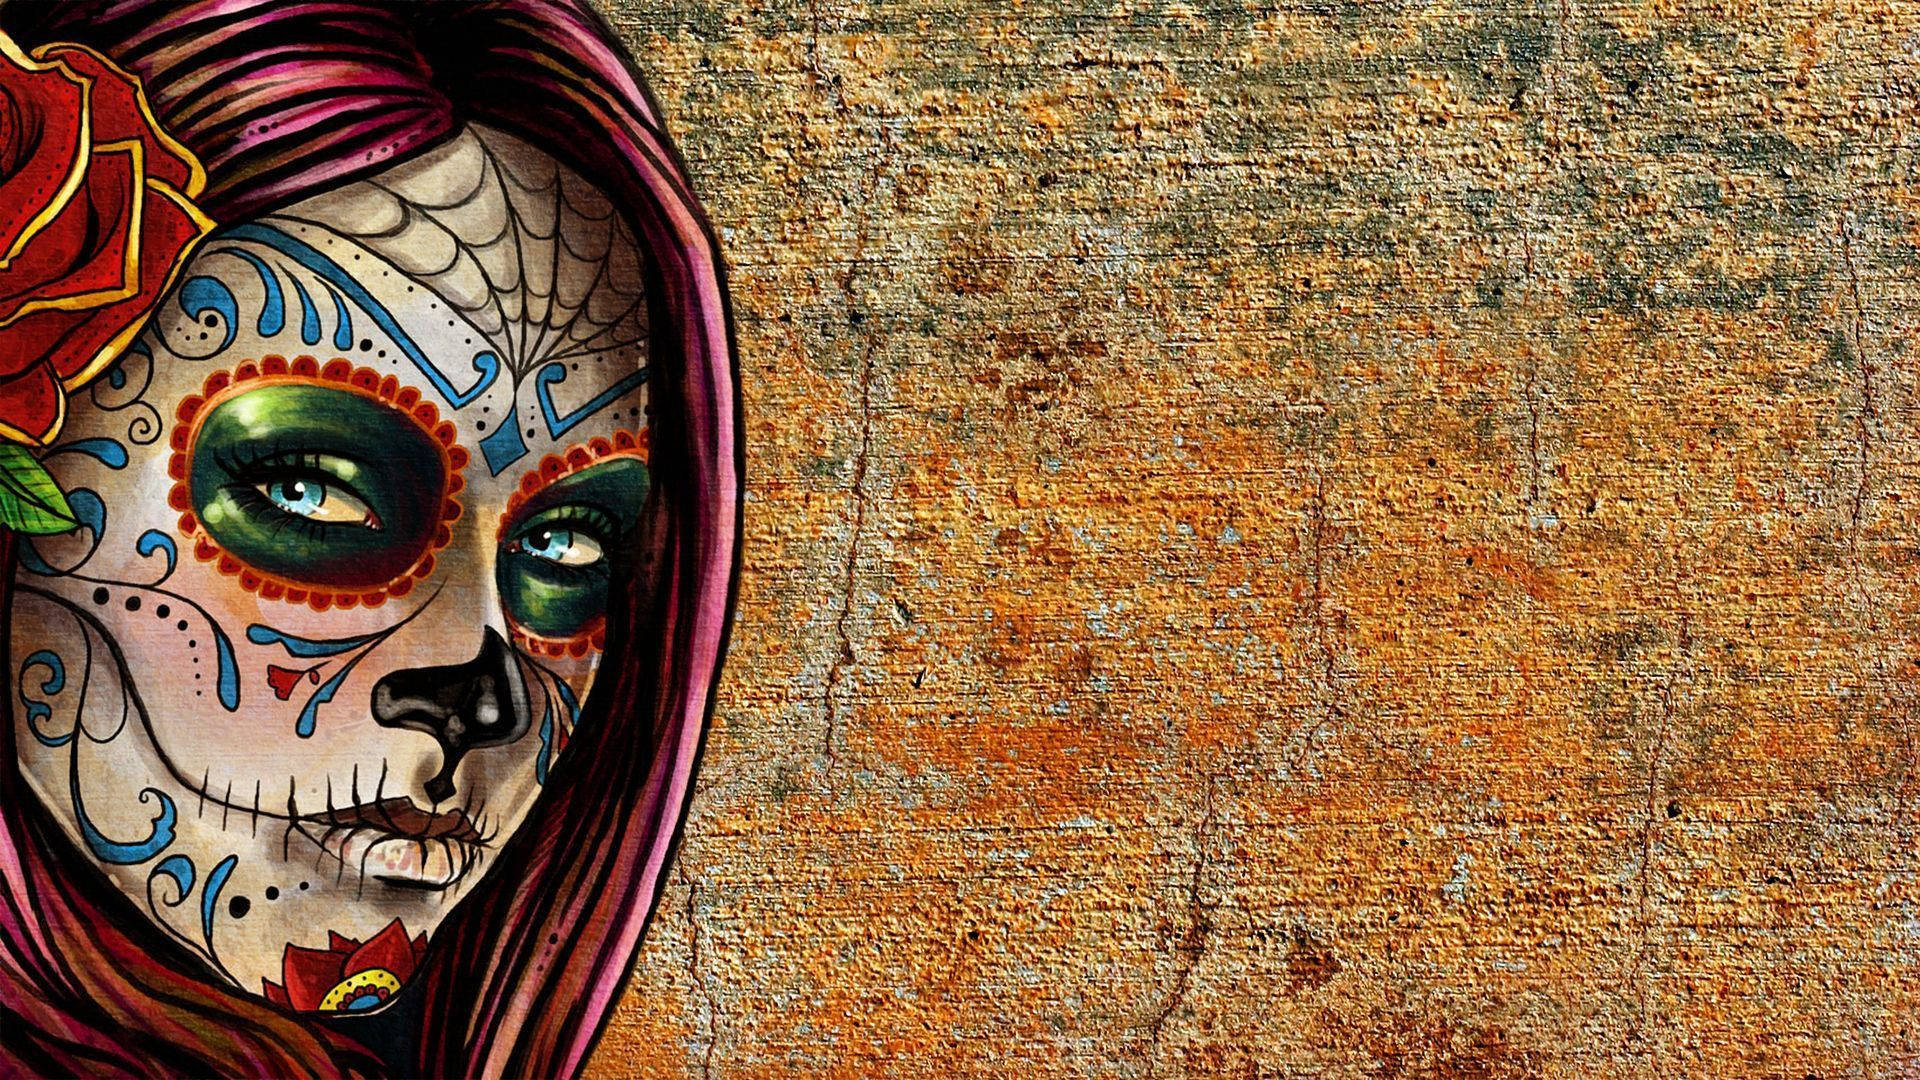 Beautiful And Cool Mexican Woman Digital Art Wallpaper